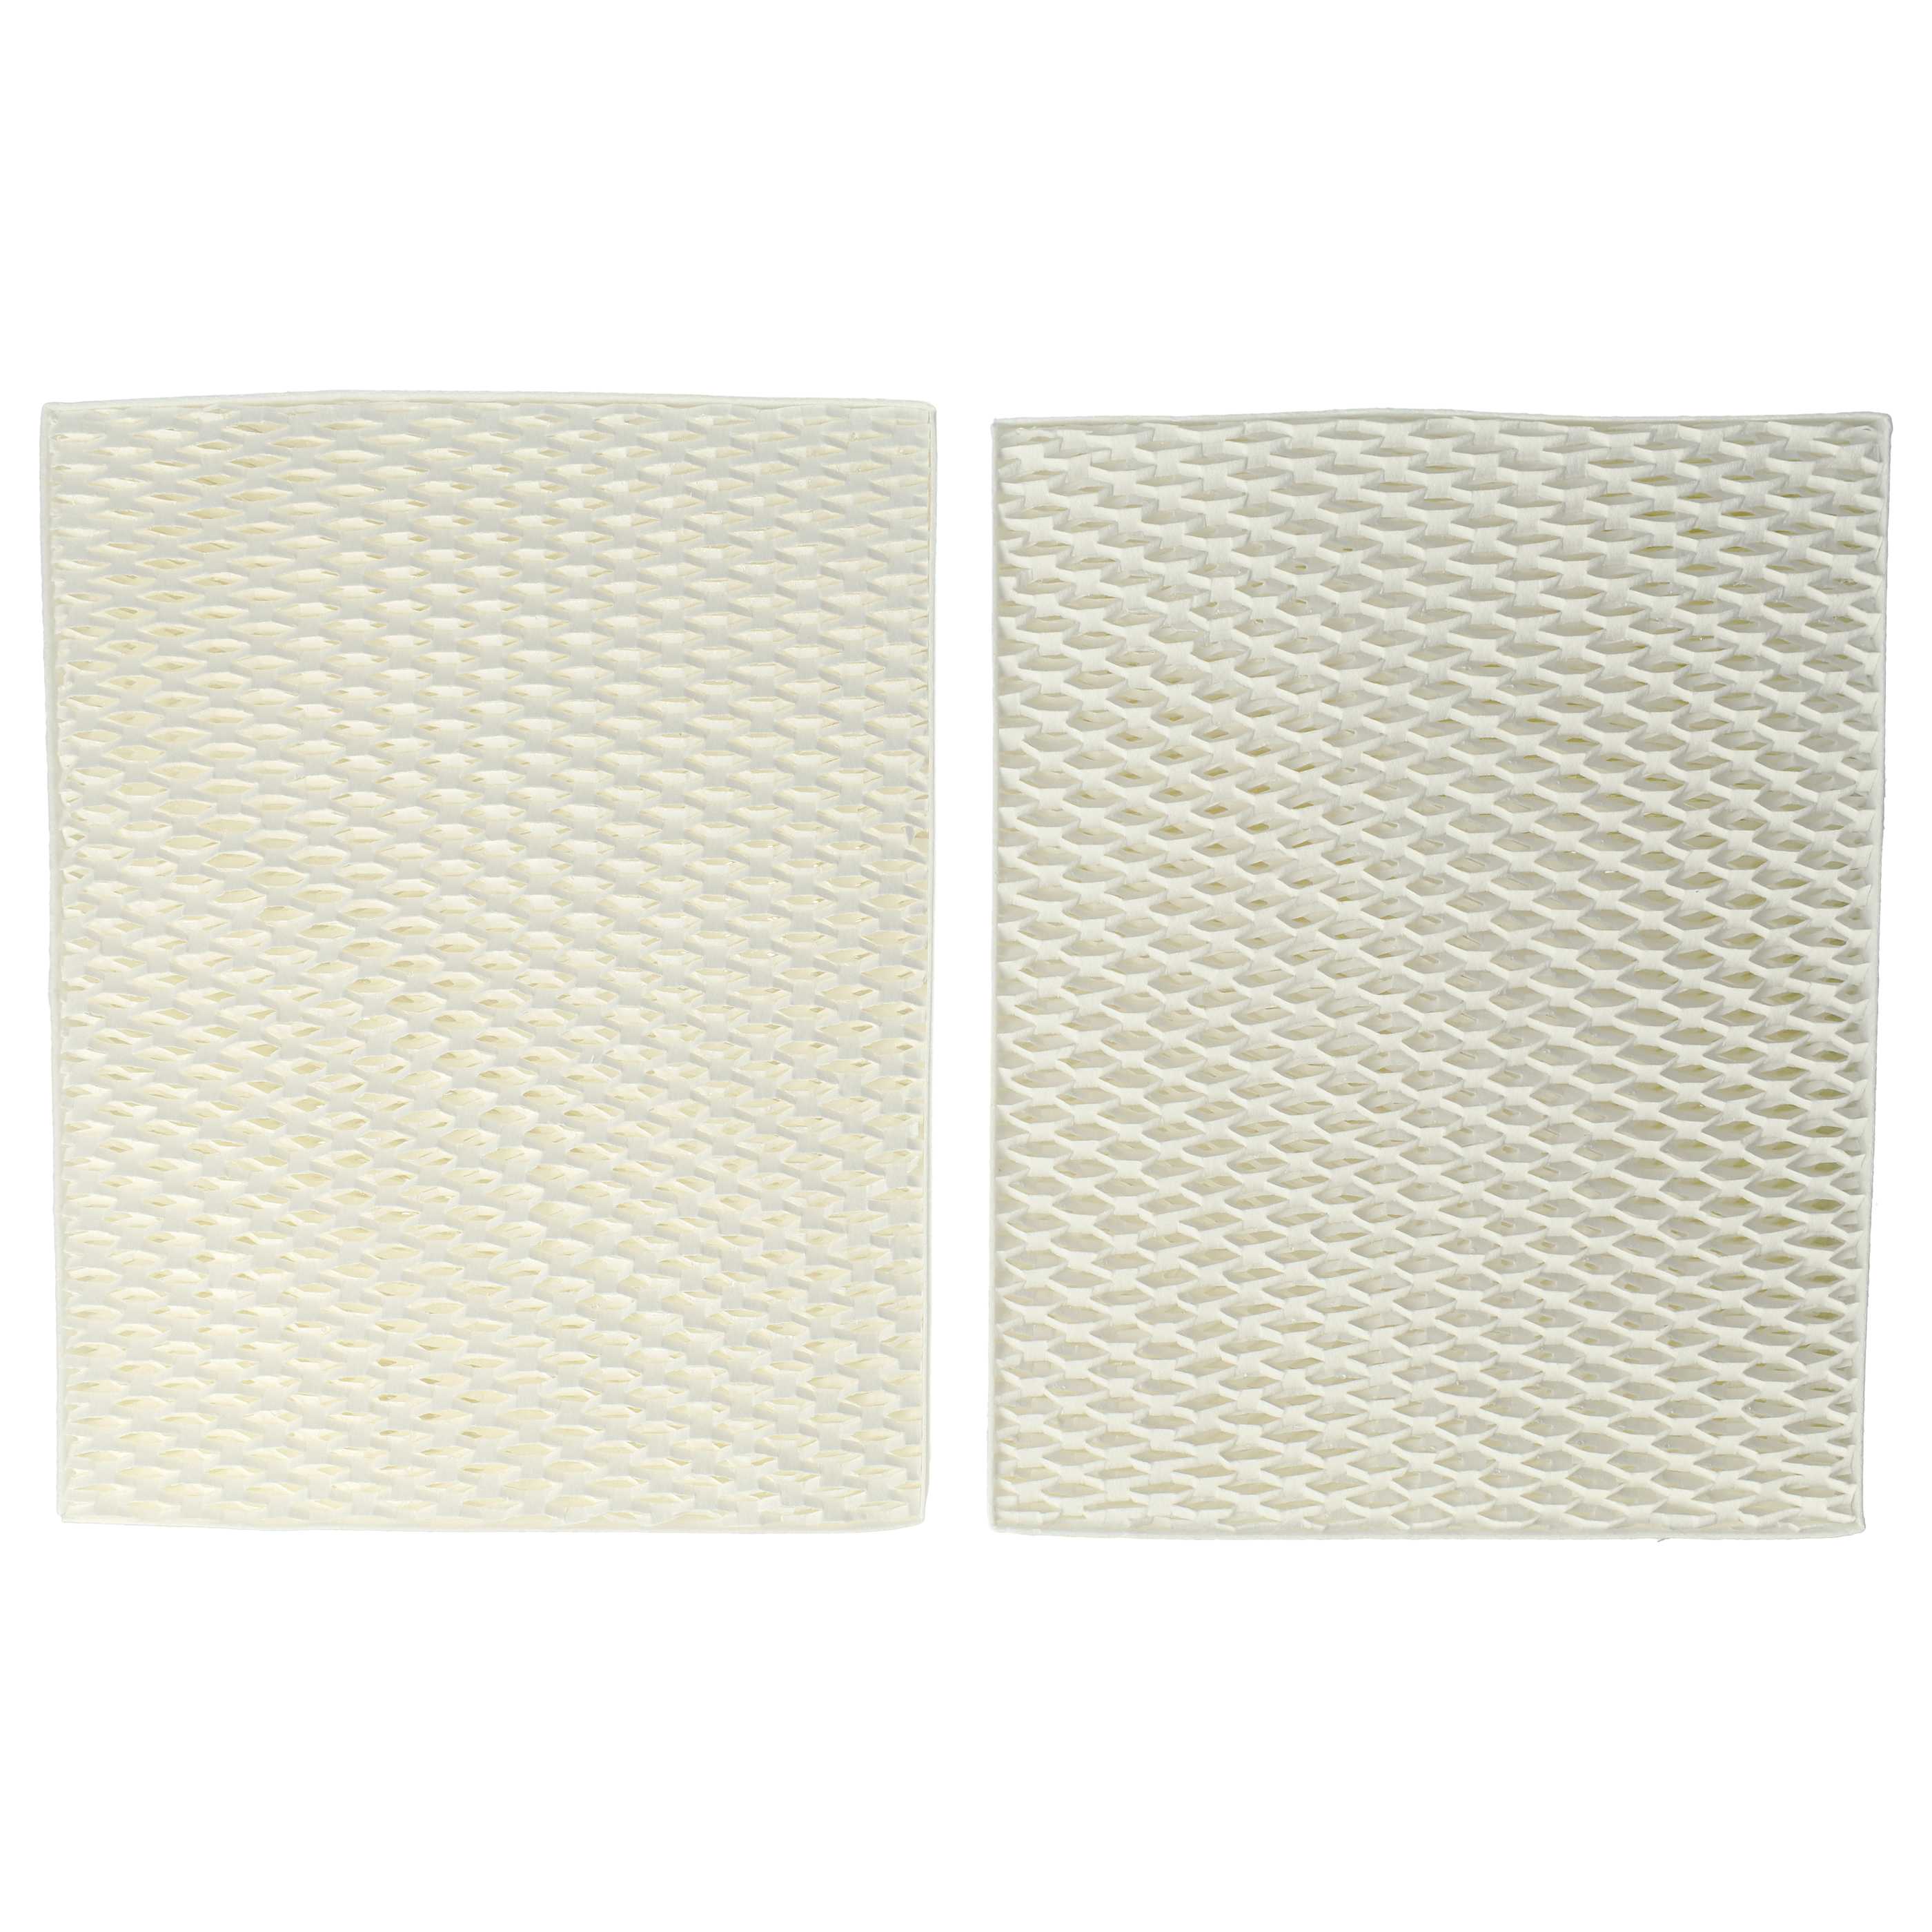 2x Filtro reemplaza Stadler Form 10004, 14643/10 para humidificador - papel